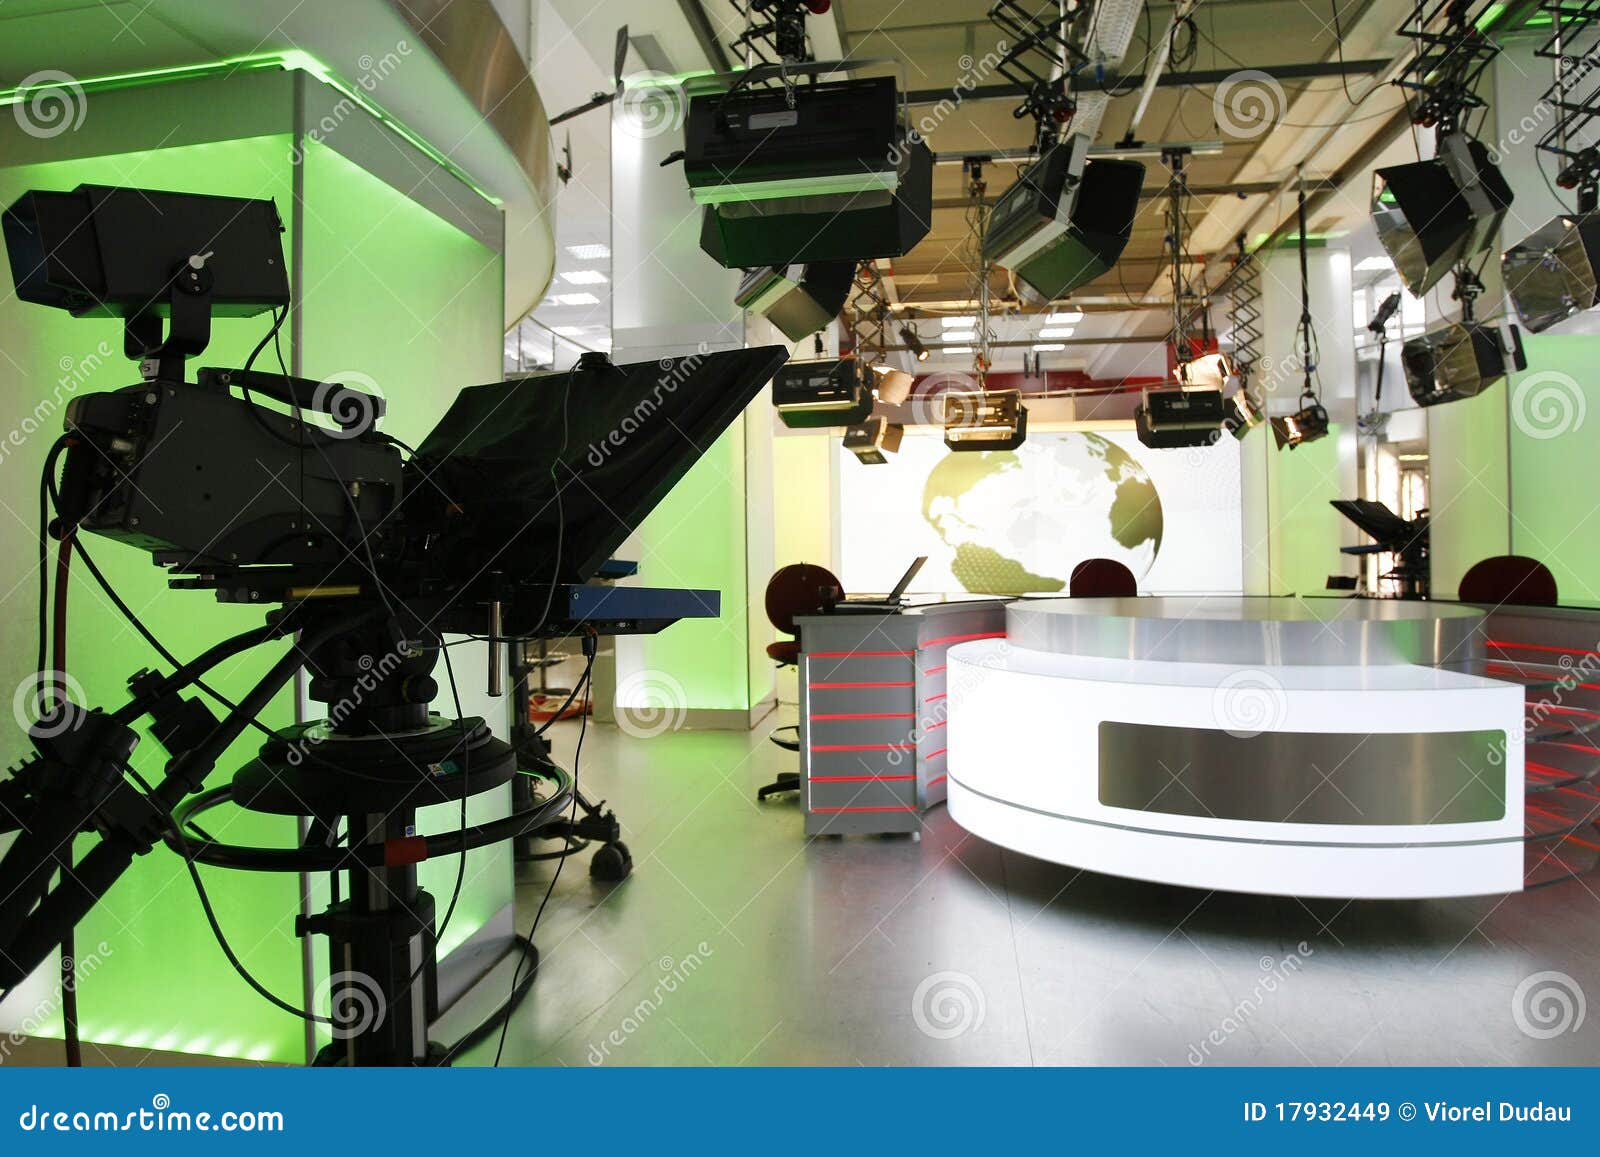 TV news studio setup stock image. Image of light, broadcast - 17932449